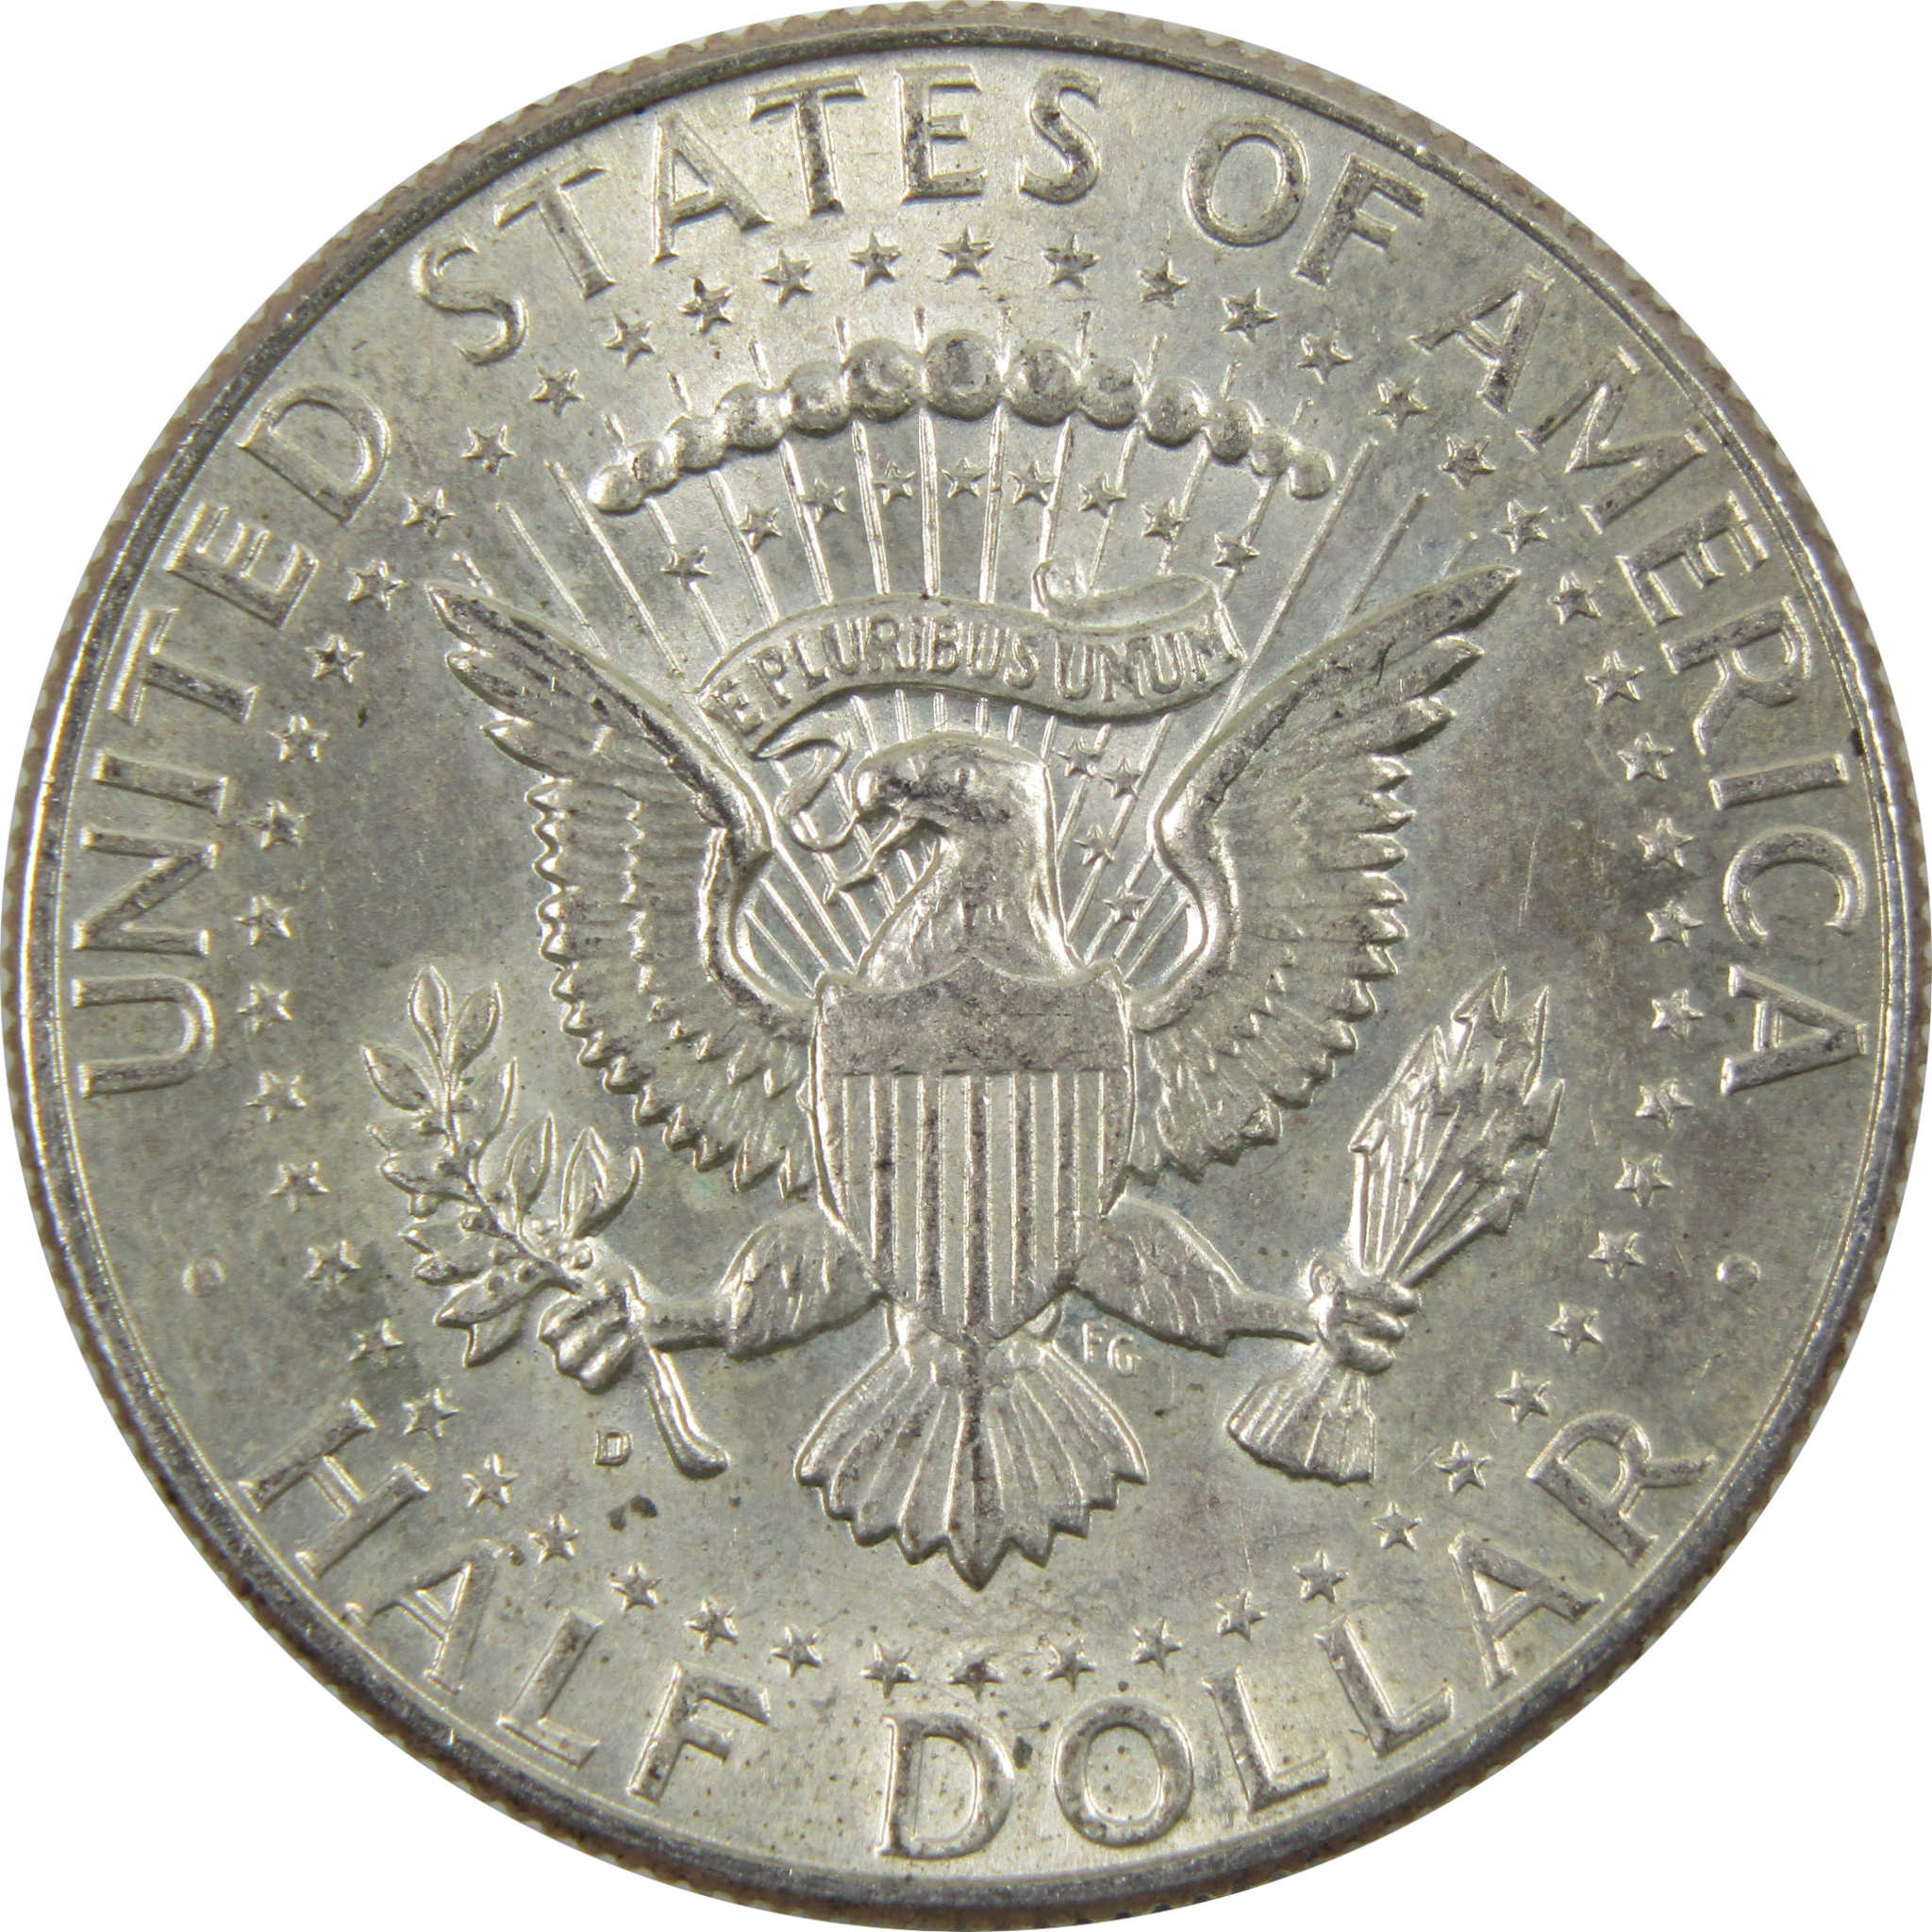 1964 D Kennedy Half Dollar AG About Good 90% Silver 50c Coin